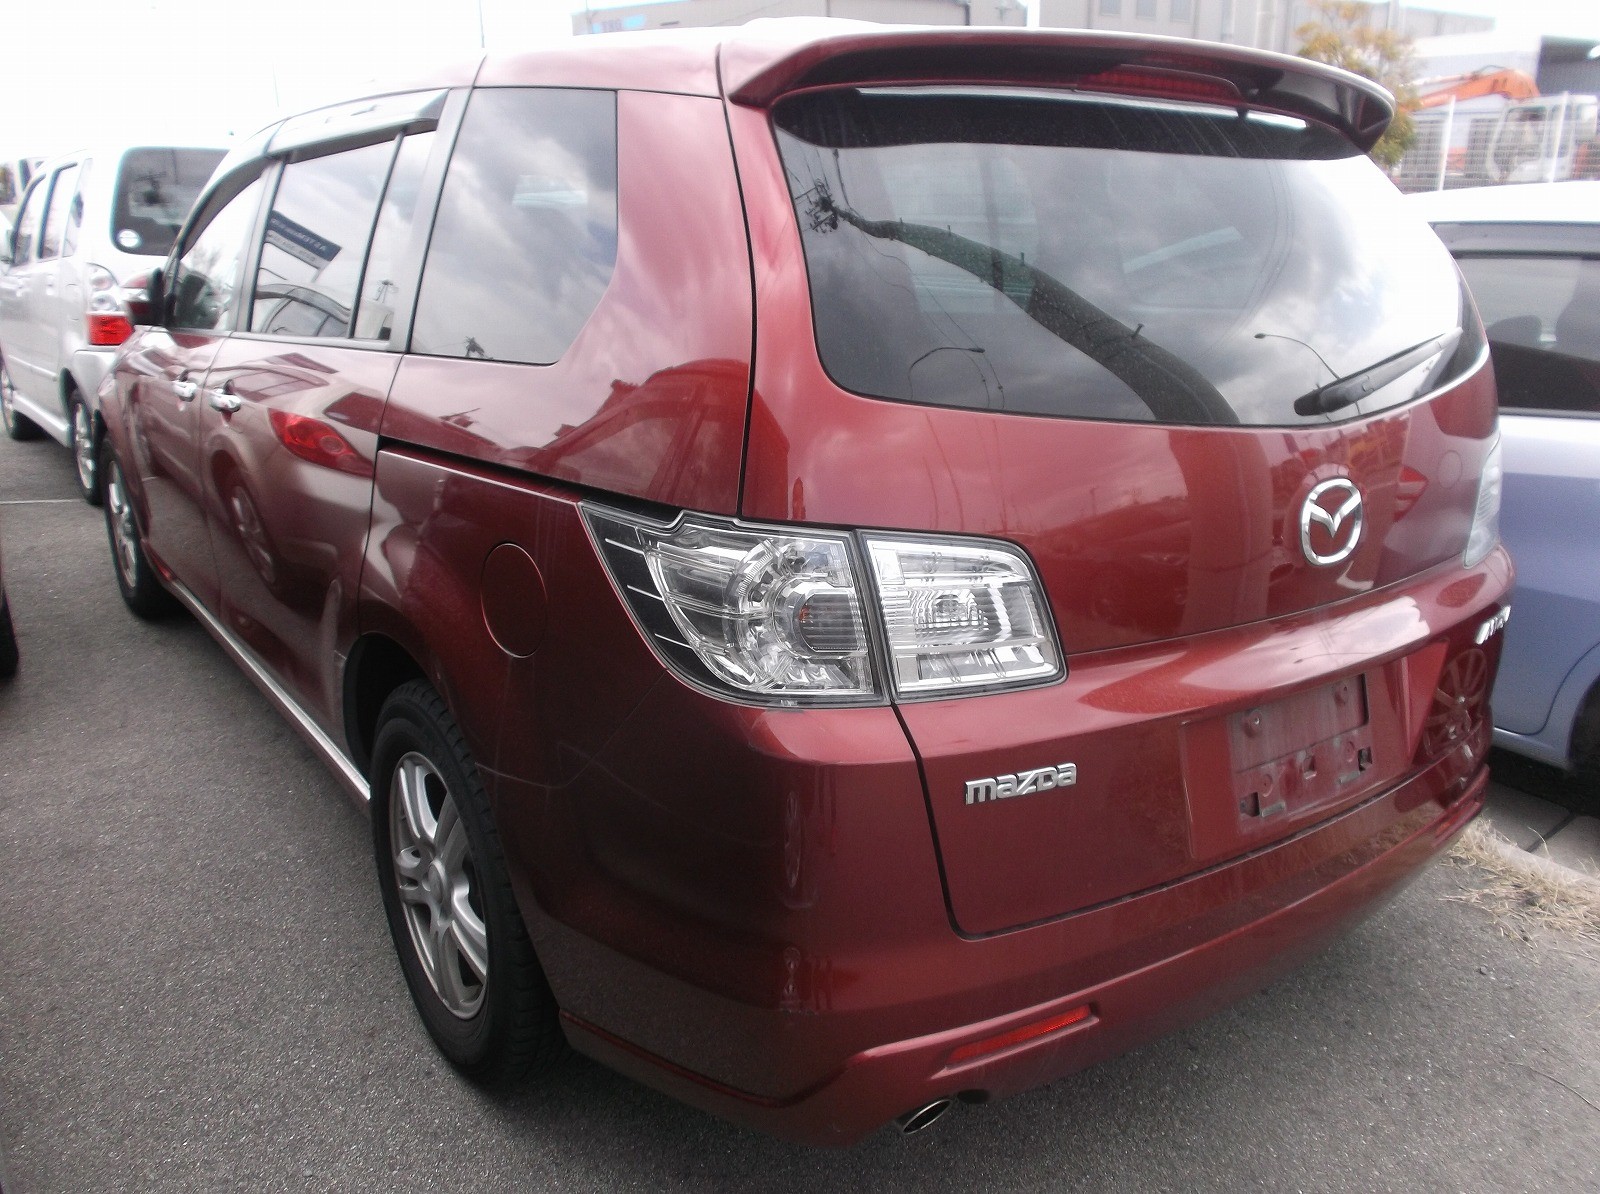 Мазда мпв новосибирск. Мазда МПВ 3 литра красная. Mazda MPV 98 lvl. Mazda MPV Rear Wing. Mazda MPV Tuning Spoiler.